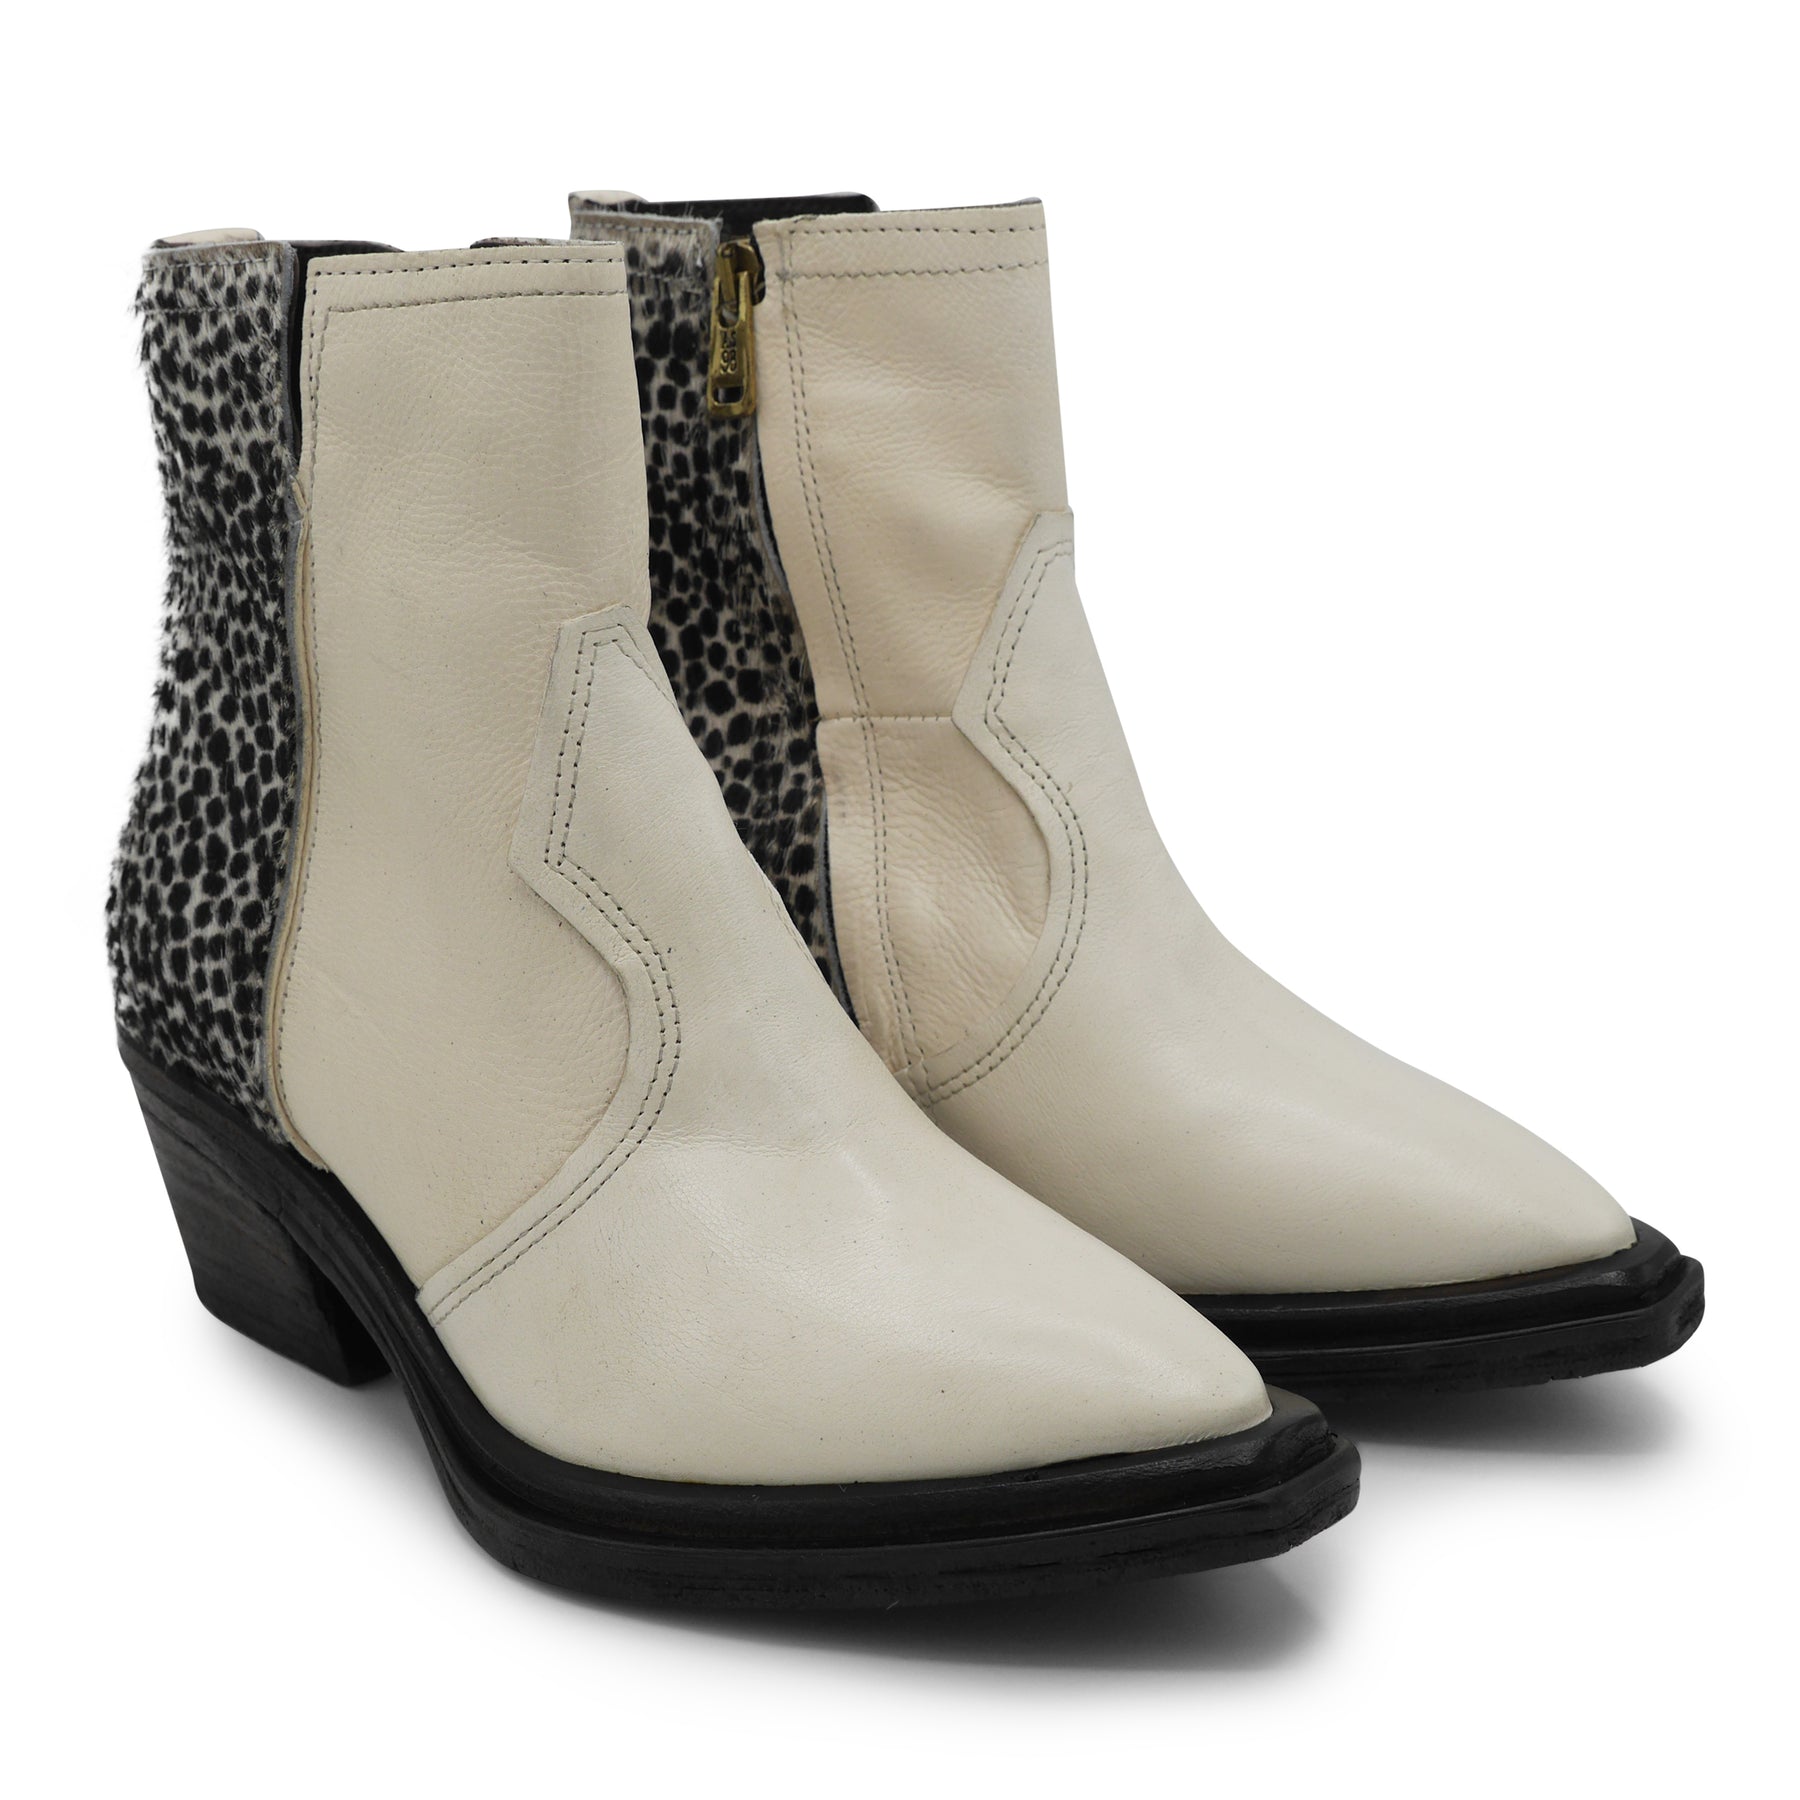 A55211 - White Cheetah Zipped Ankle Boot